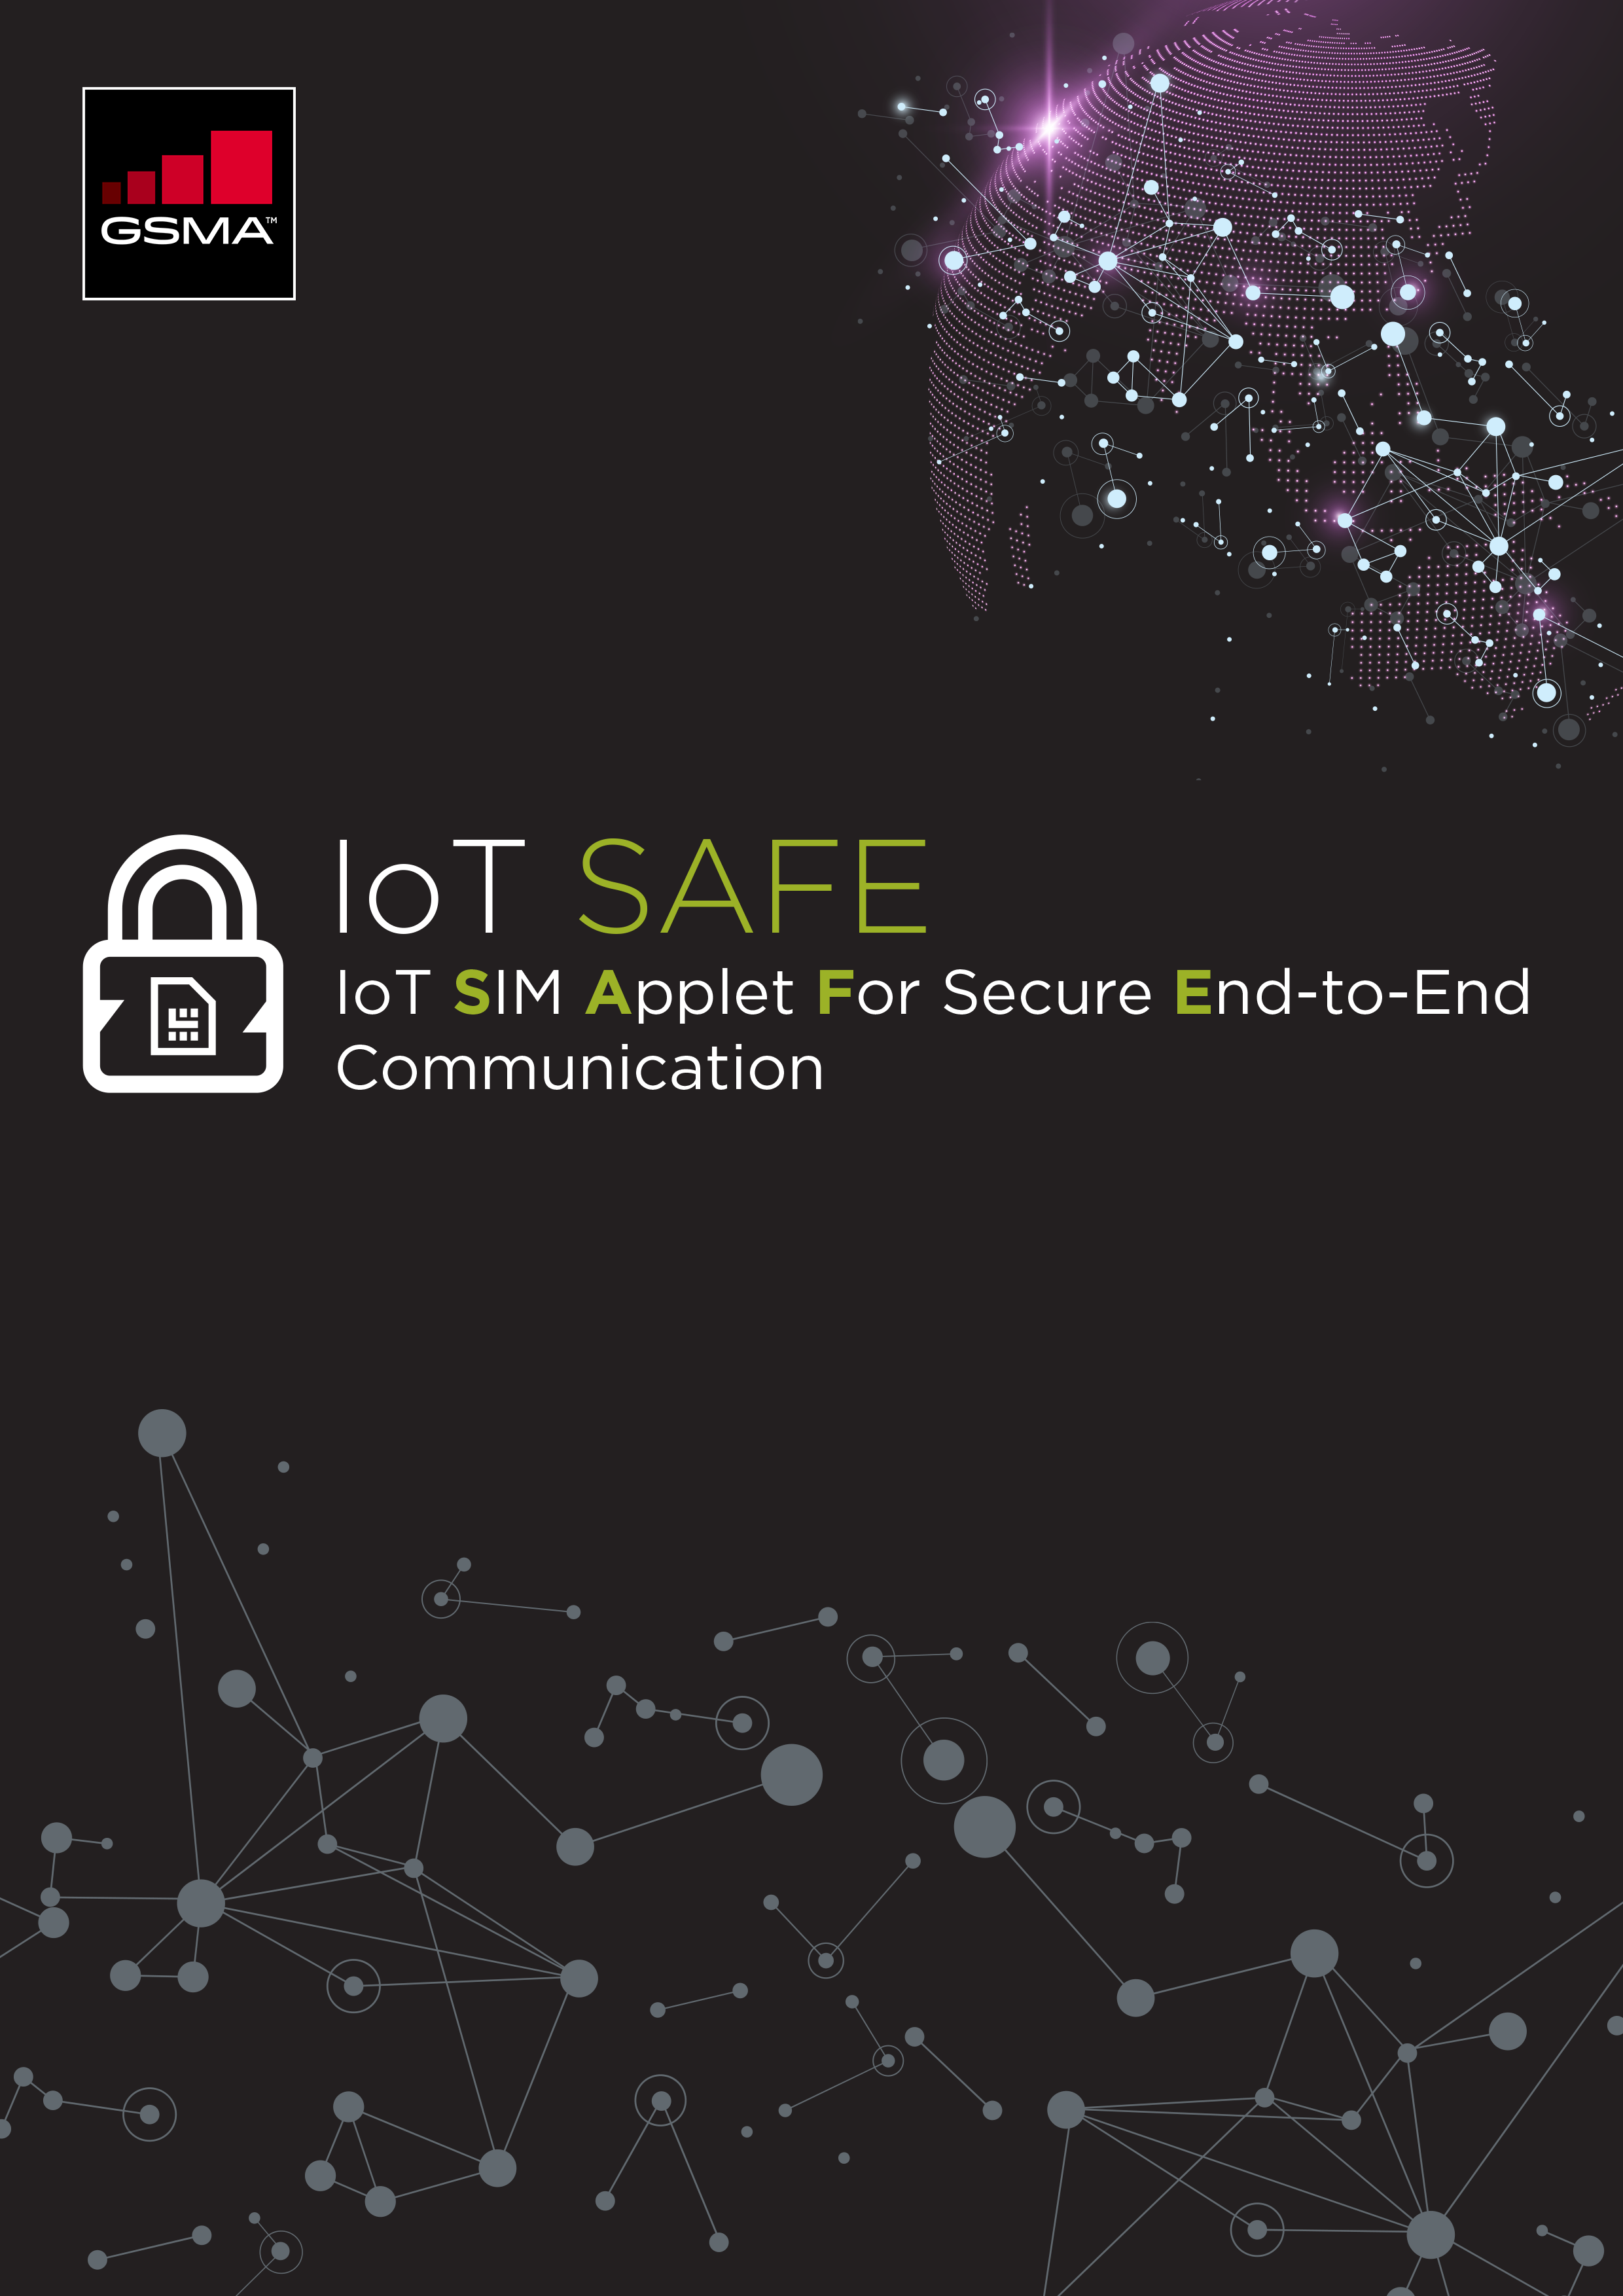 IoT SAFE (IoT SIM Applet For Secure End-to-End Communication)